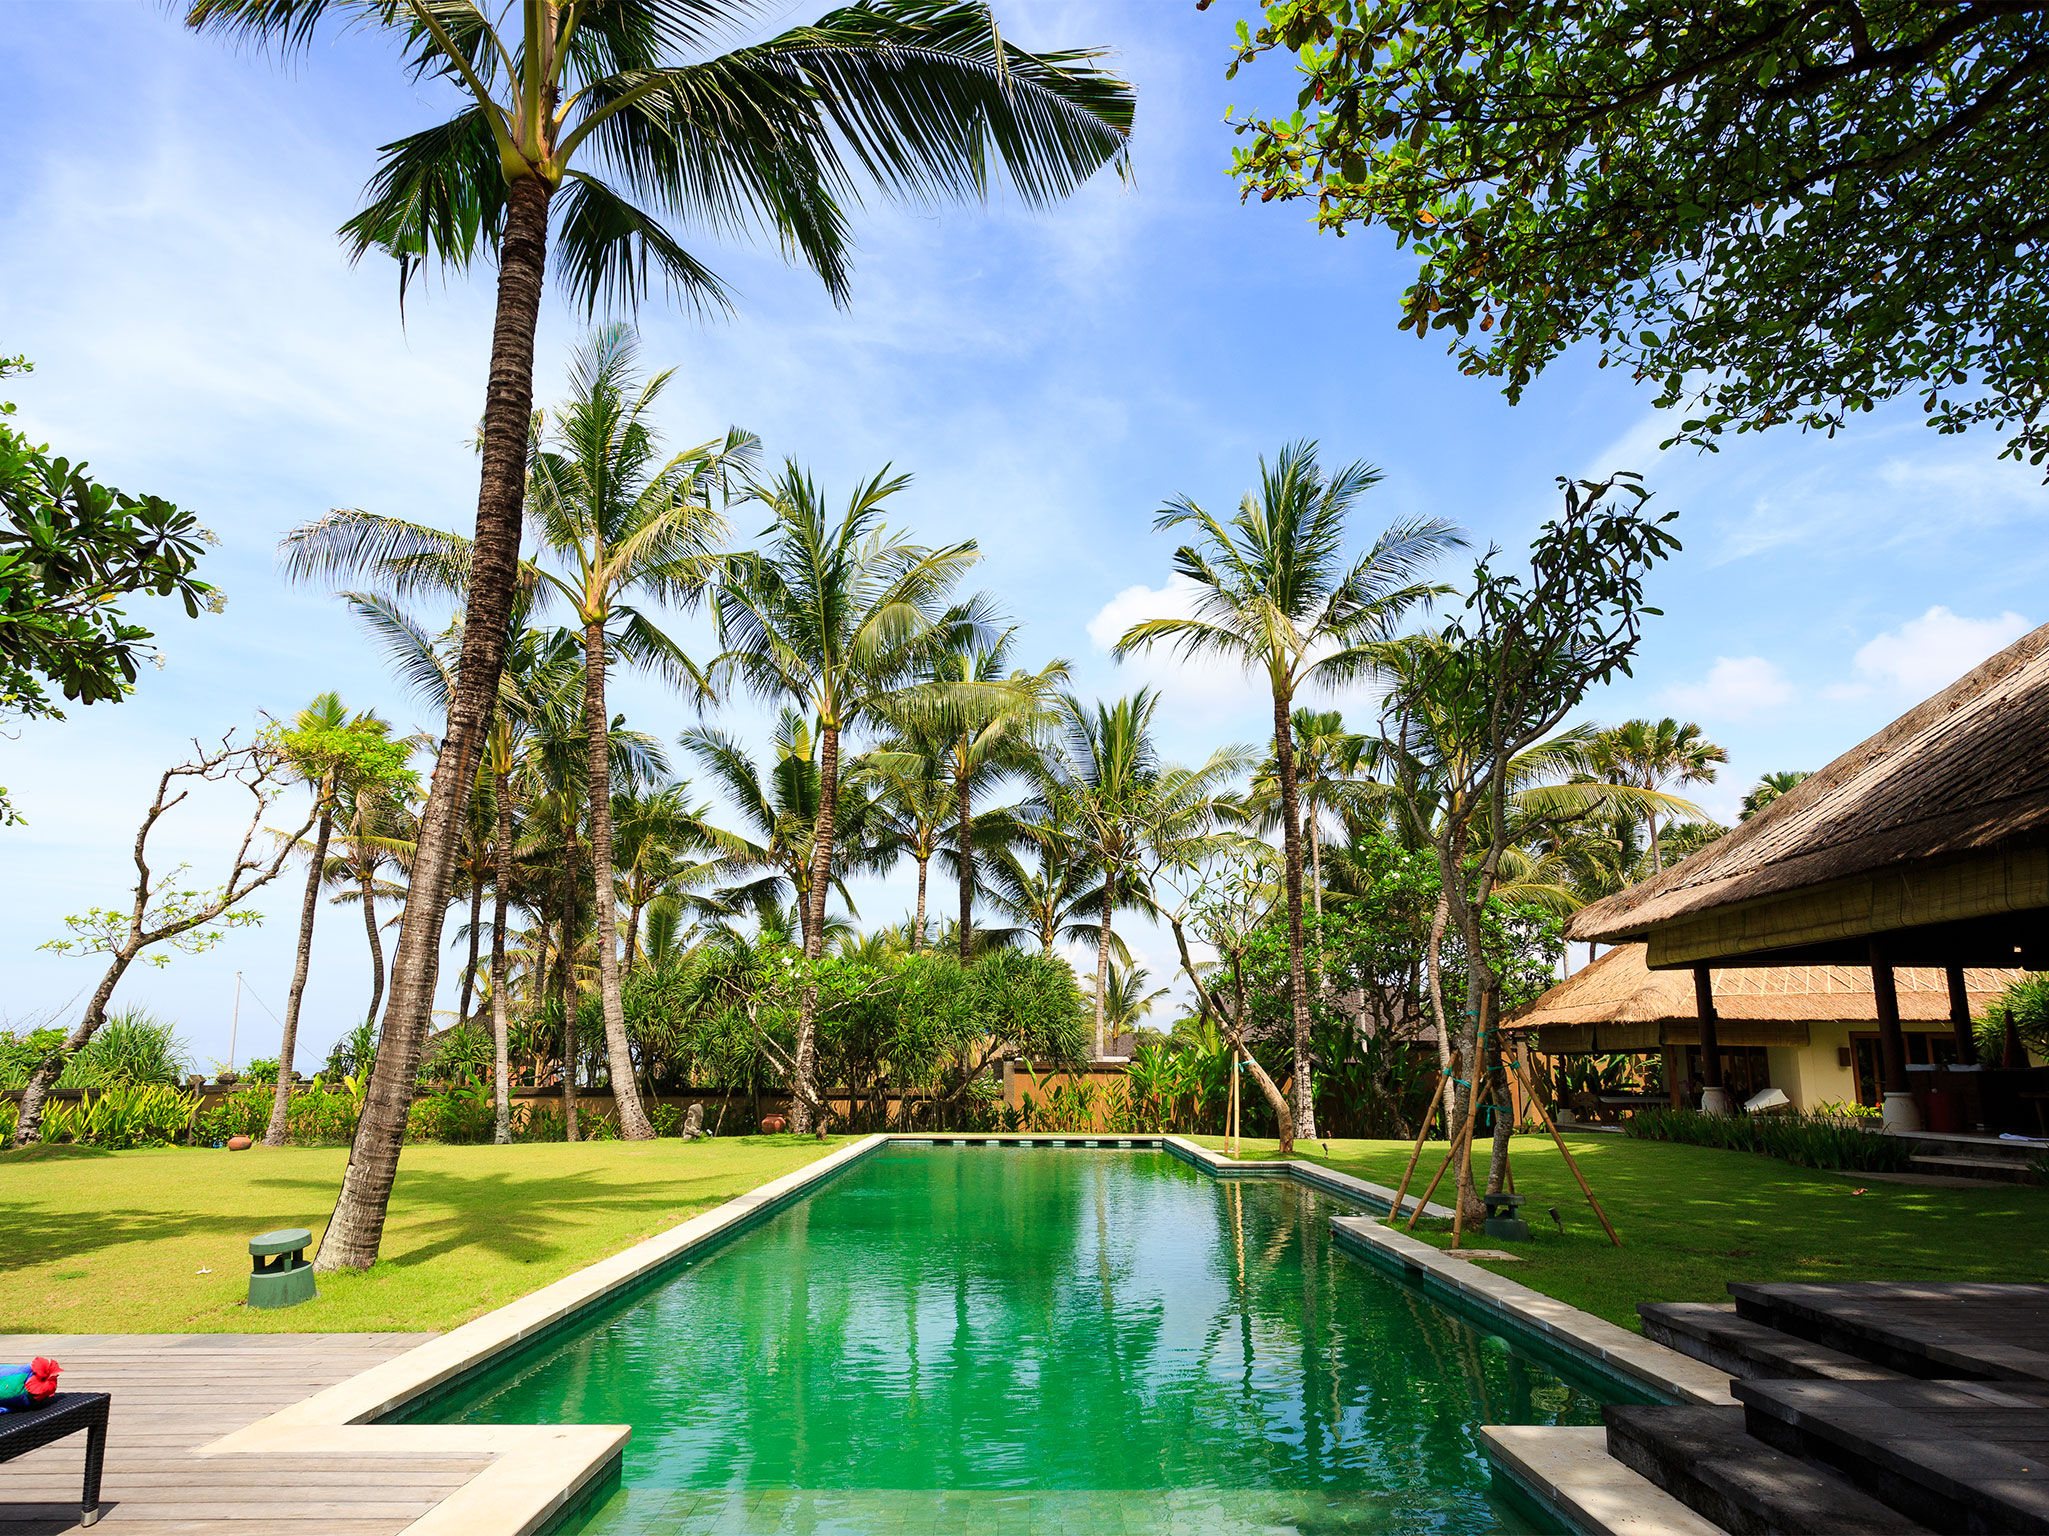 42. Villa Maridadi - Outstanding pool setting - Villa Maridadi, Seseh-Tanah Lot, Bali